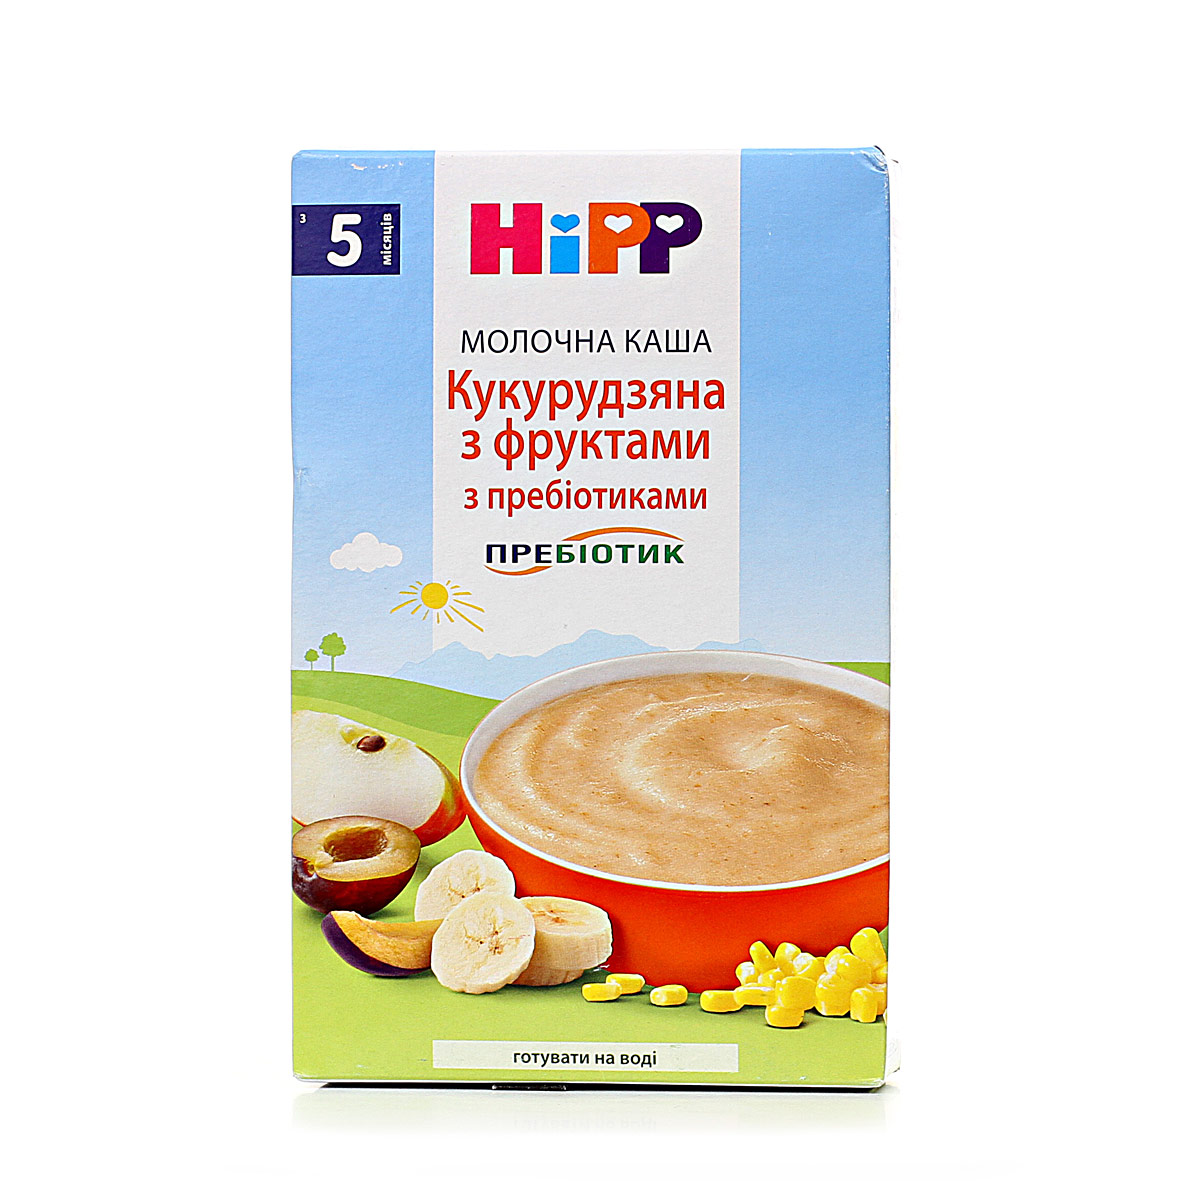 Молочна каша "Кукурудзяна з фруктами" з пребіотиками - фото 7 | Интернет-магазин Shop HiPP